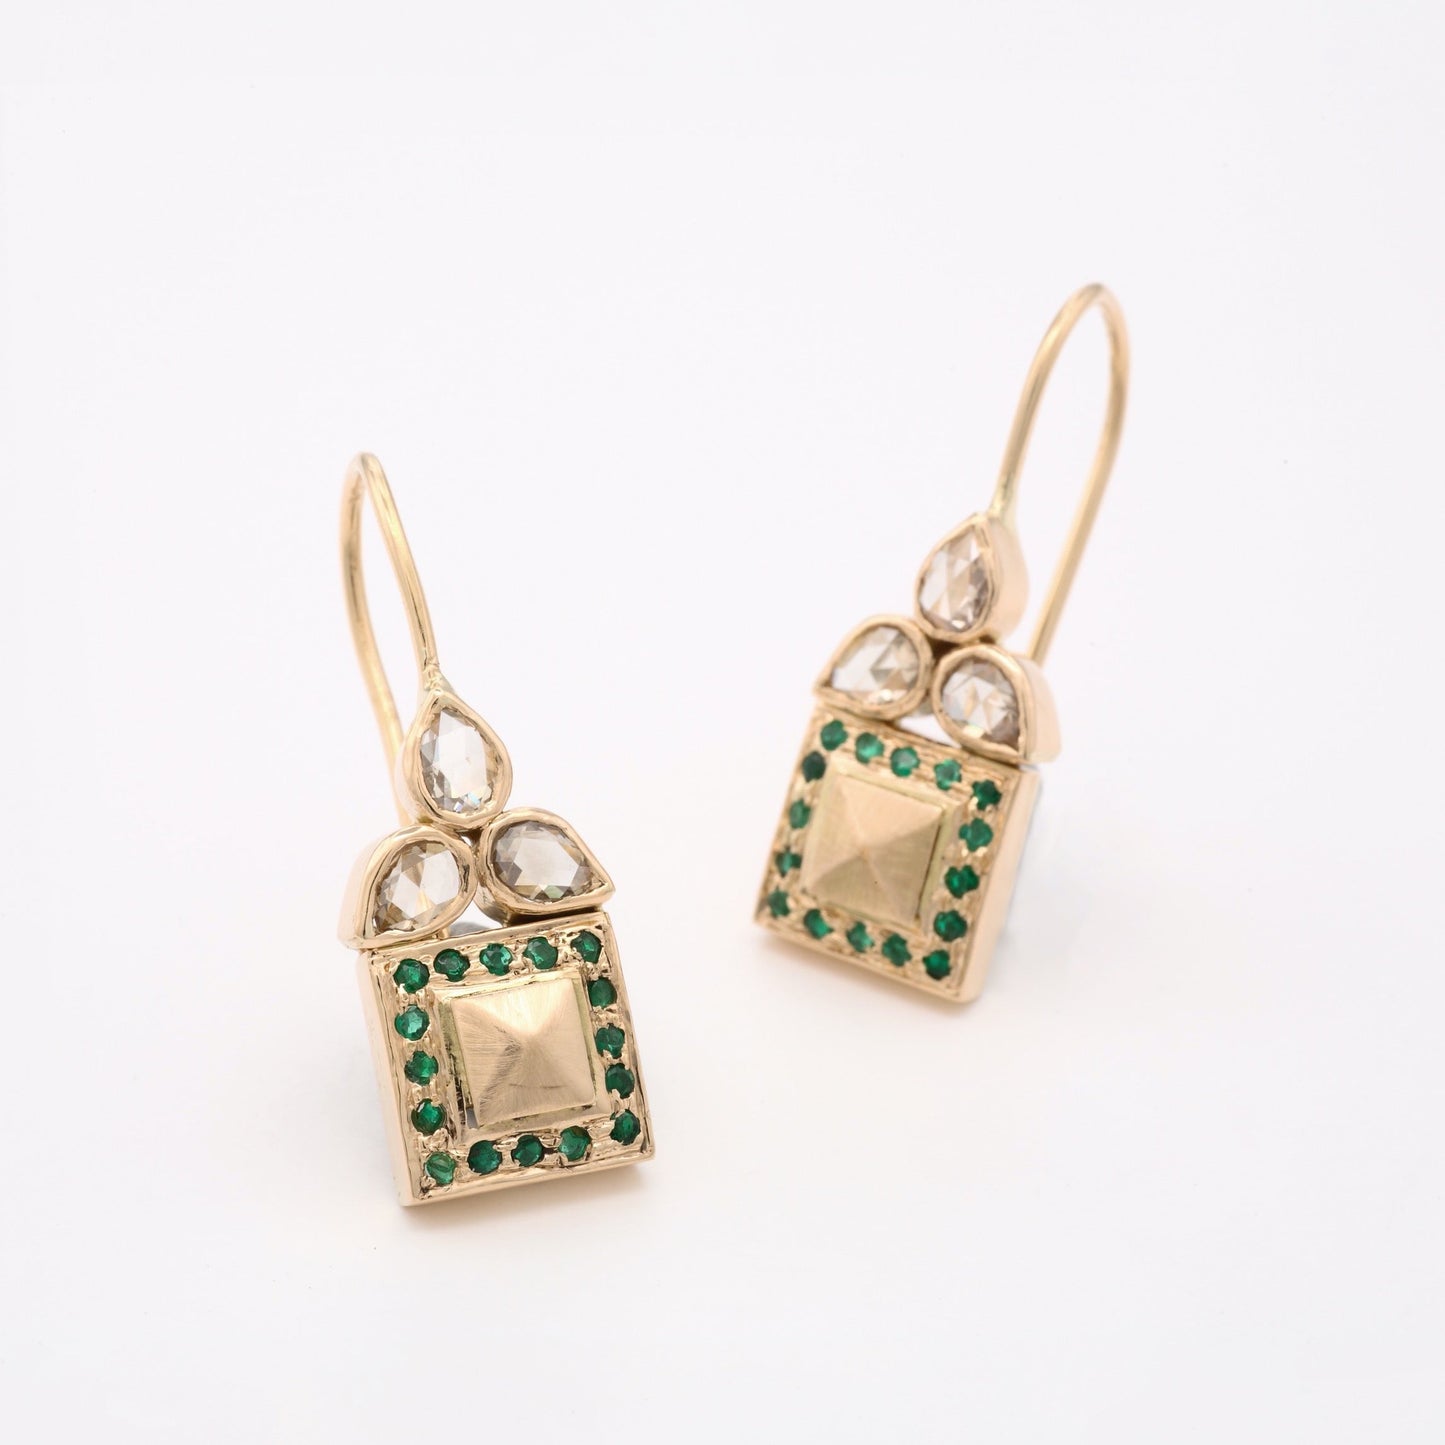 The Aadya Gold, Diamond and Emerald Hook Earrings by Rasvihar